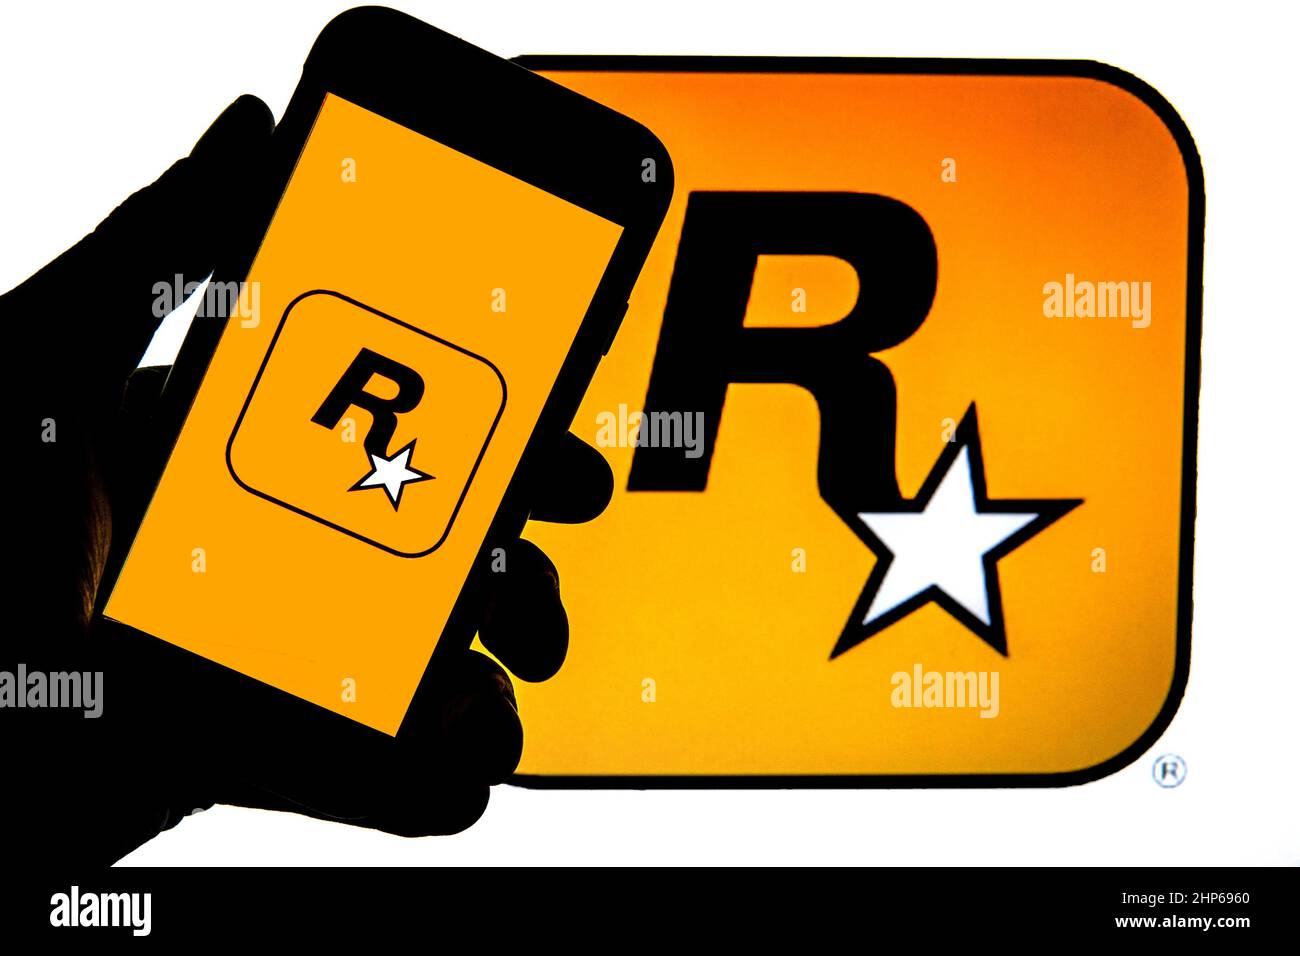 das Logo der Marke Rockstar games, Berlin Stock Photo - Alamy